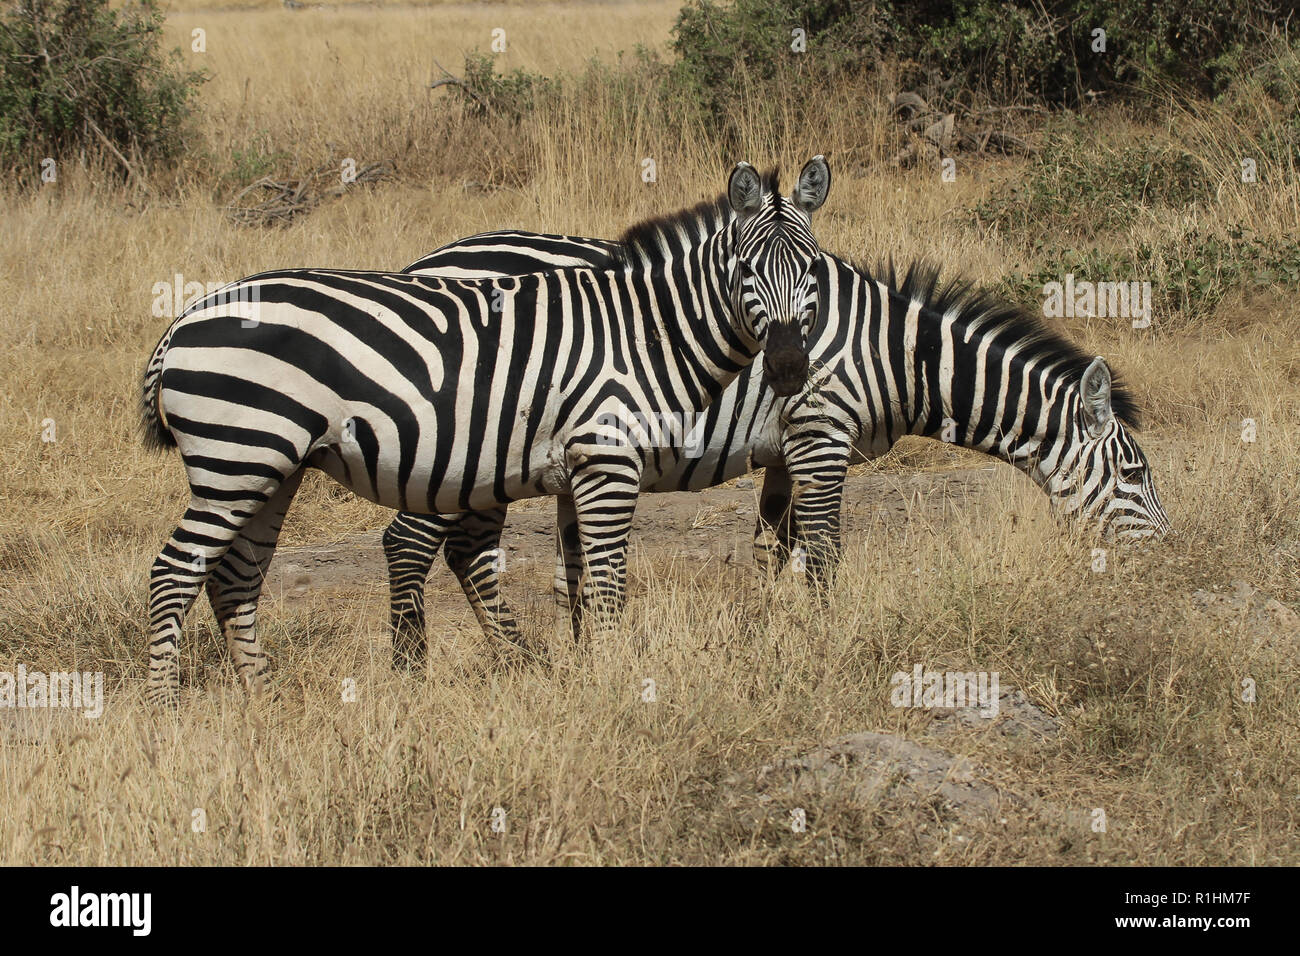 Zebras grazing in the wilderness Stock Photo